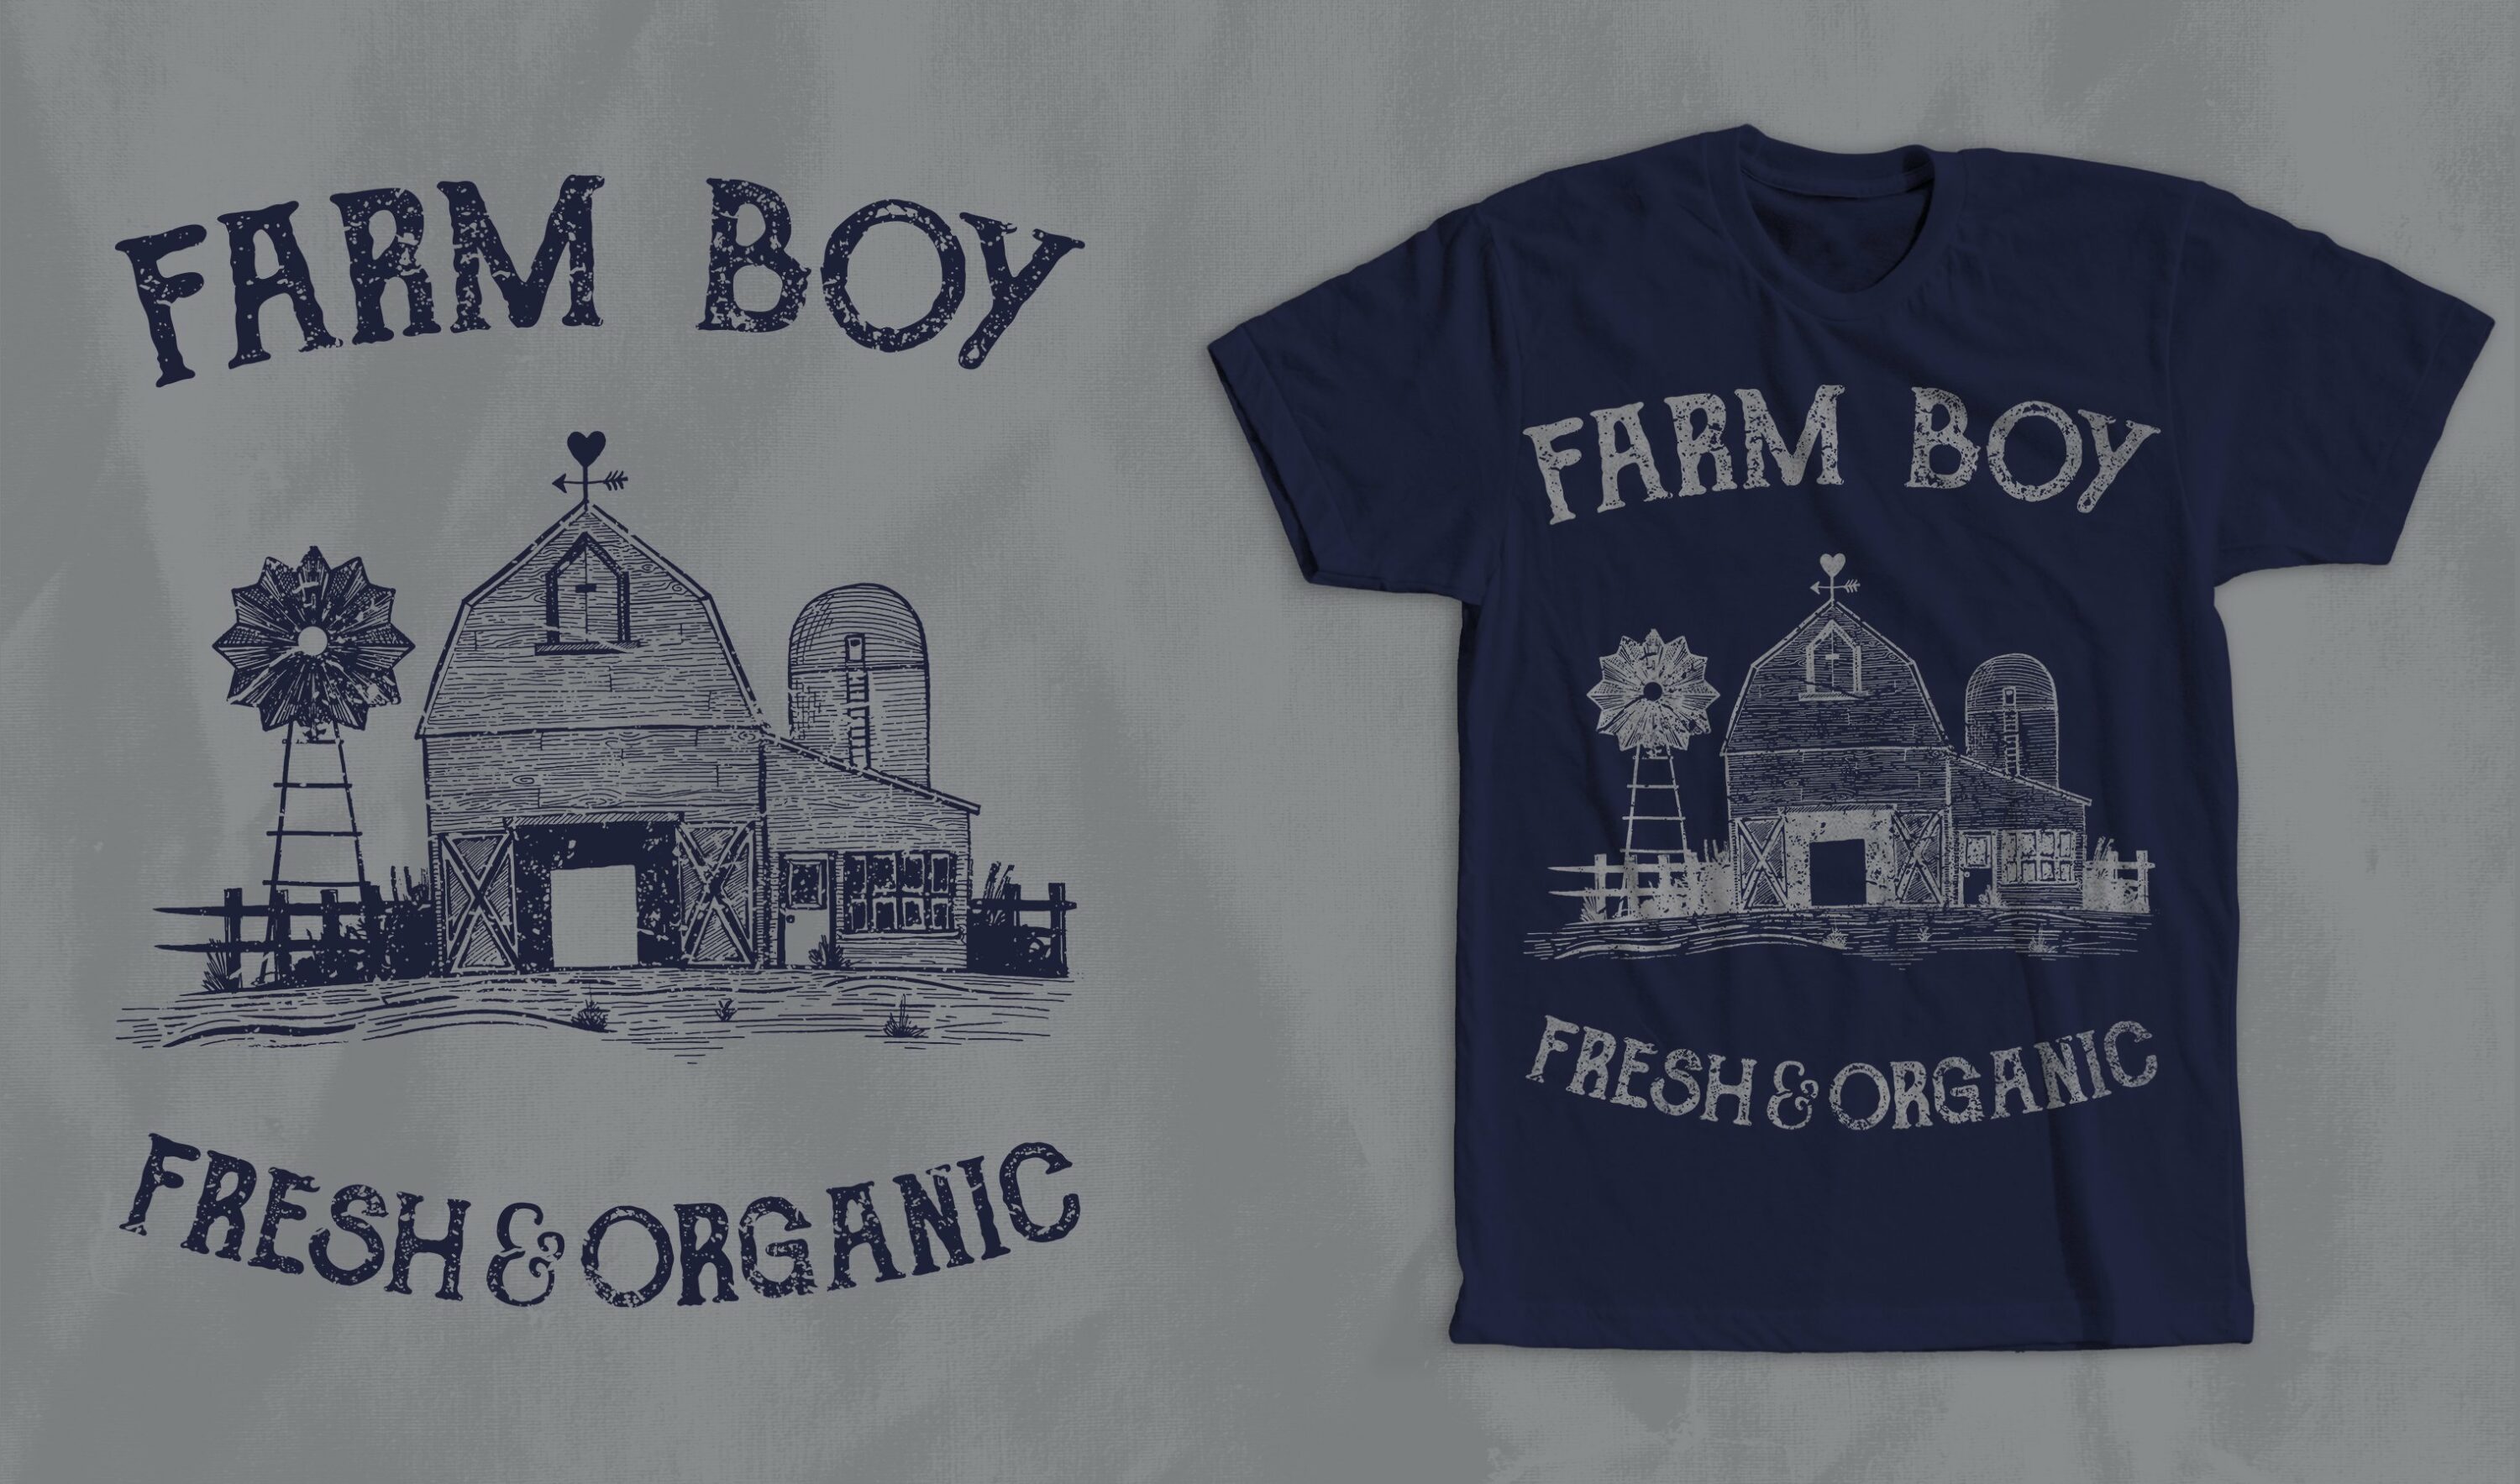 Blue t-shirt with a vintage farm illustration.